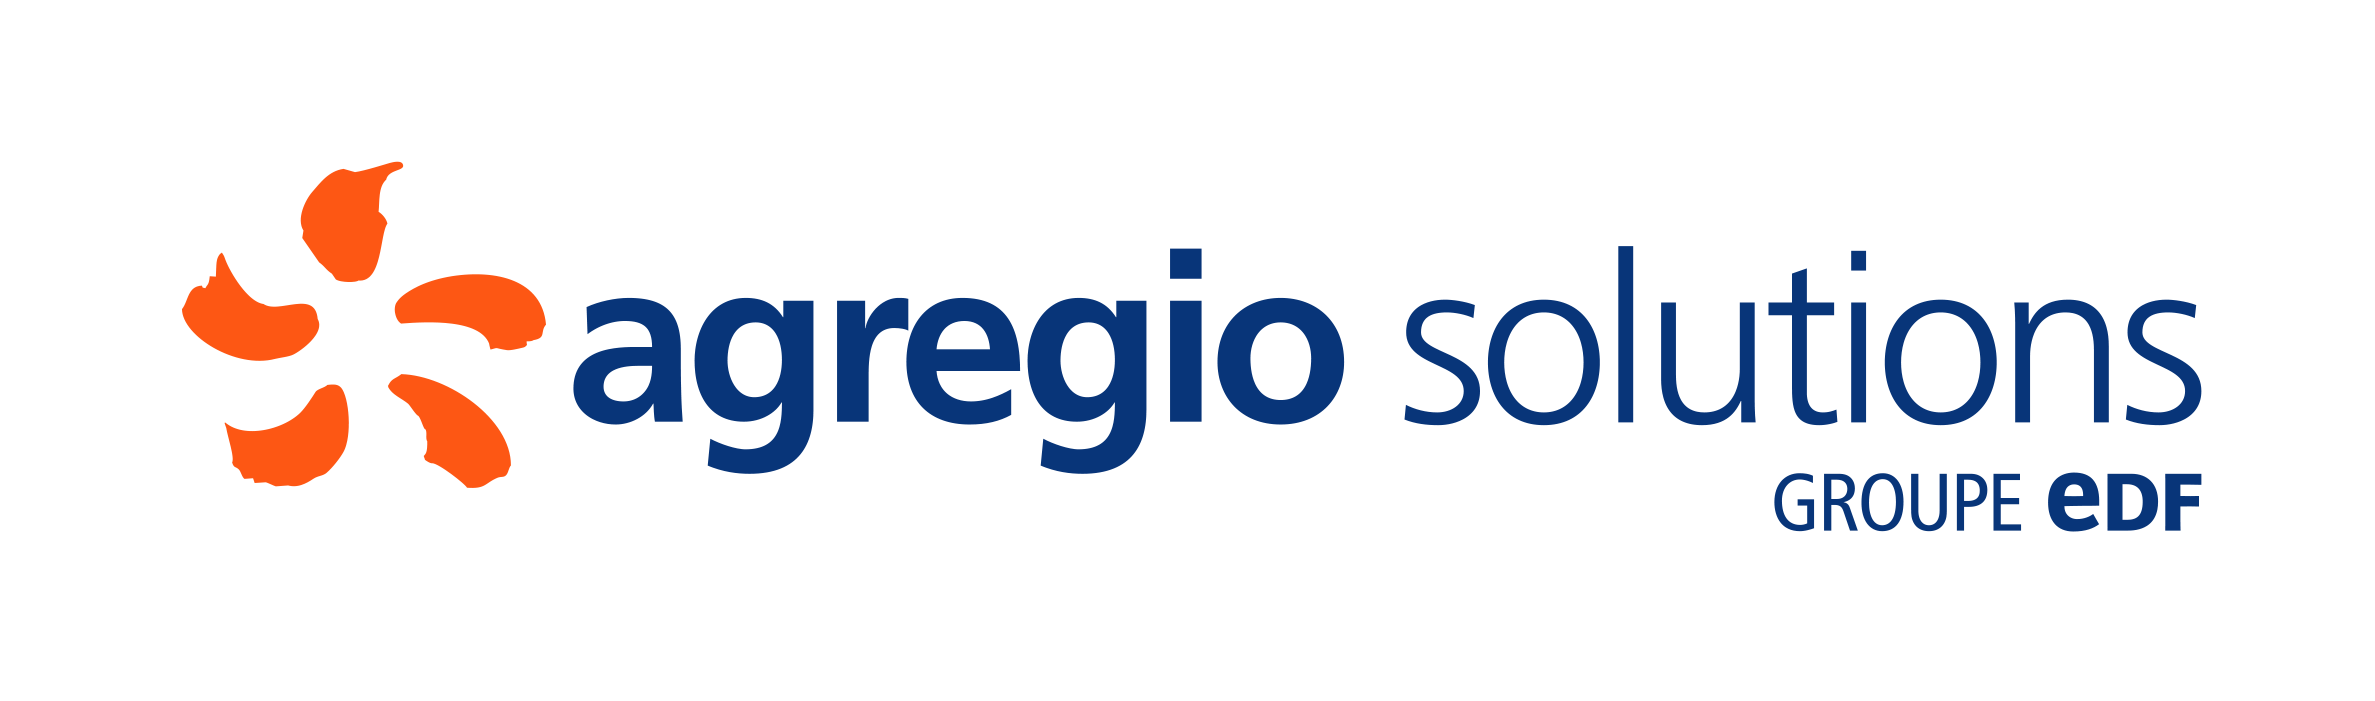 Agregio Solutions 